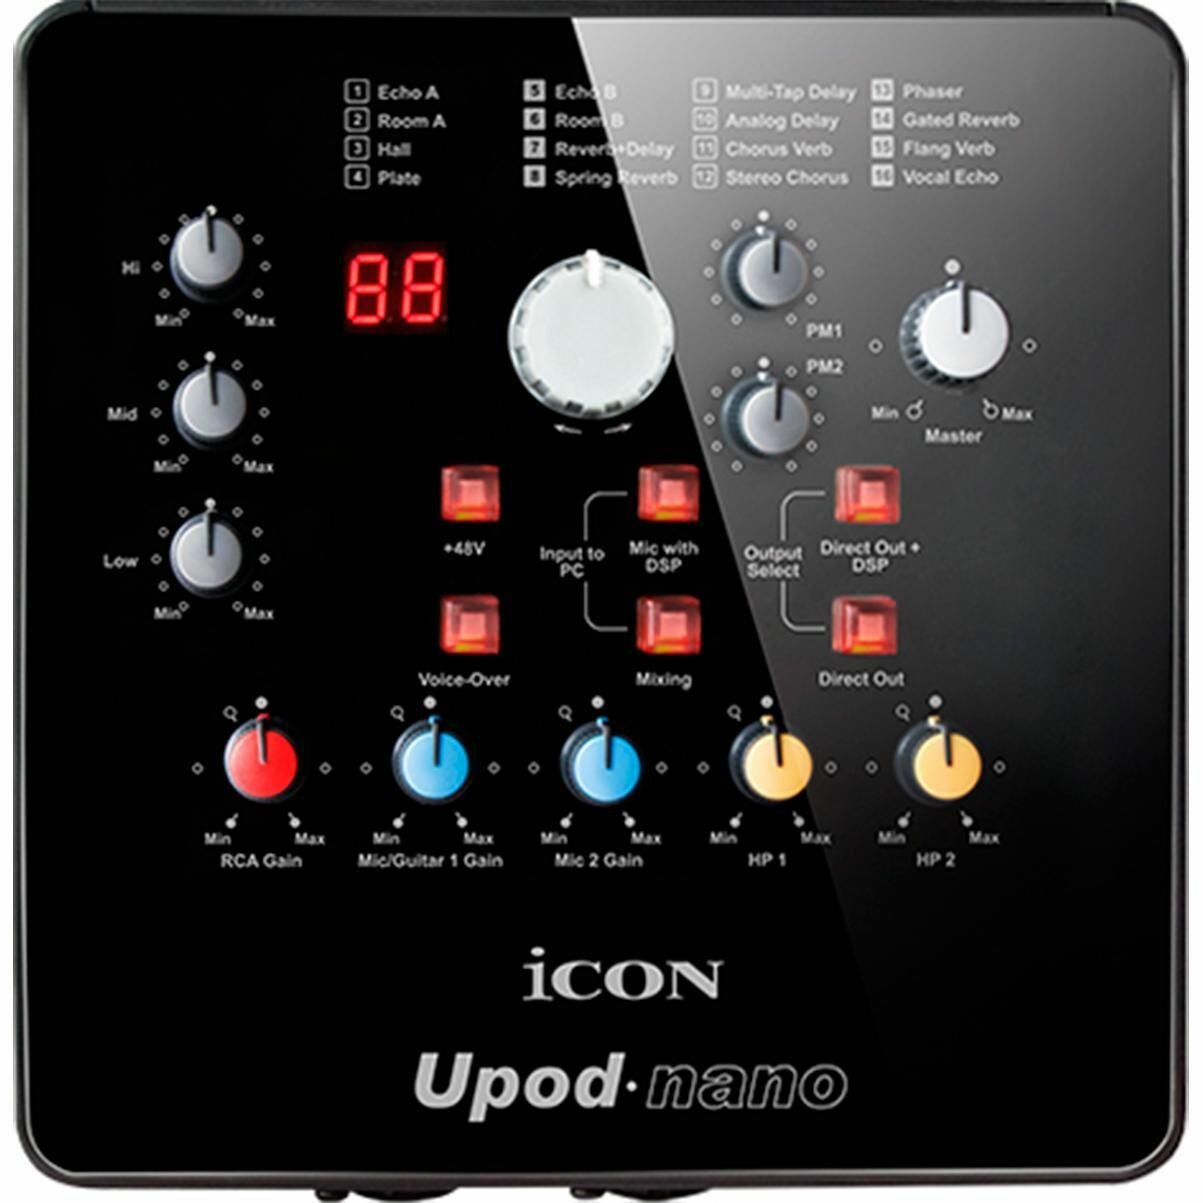 ICON UPod Nano - USB аудио интерфейс с DSP обработкой 2х2 входа/выхода full duplex запись и воспроизведение 16 DSP эффектов 2-х разрядный индикатор АЦП/ЦАП 16 бит/48 кГц частот. диапазон 22-20000 Гц динам. диапазон 90 дБ S/N -90 дБ THD+N